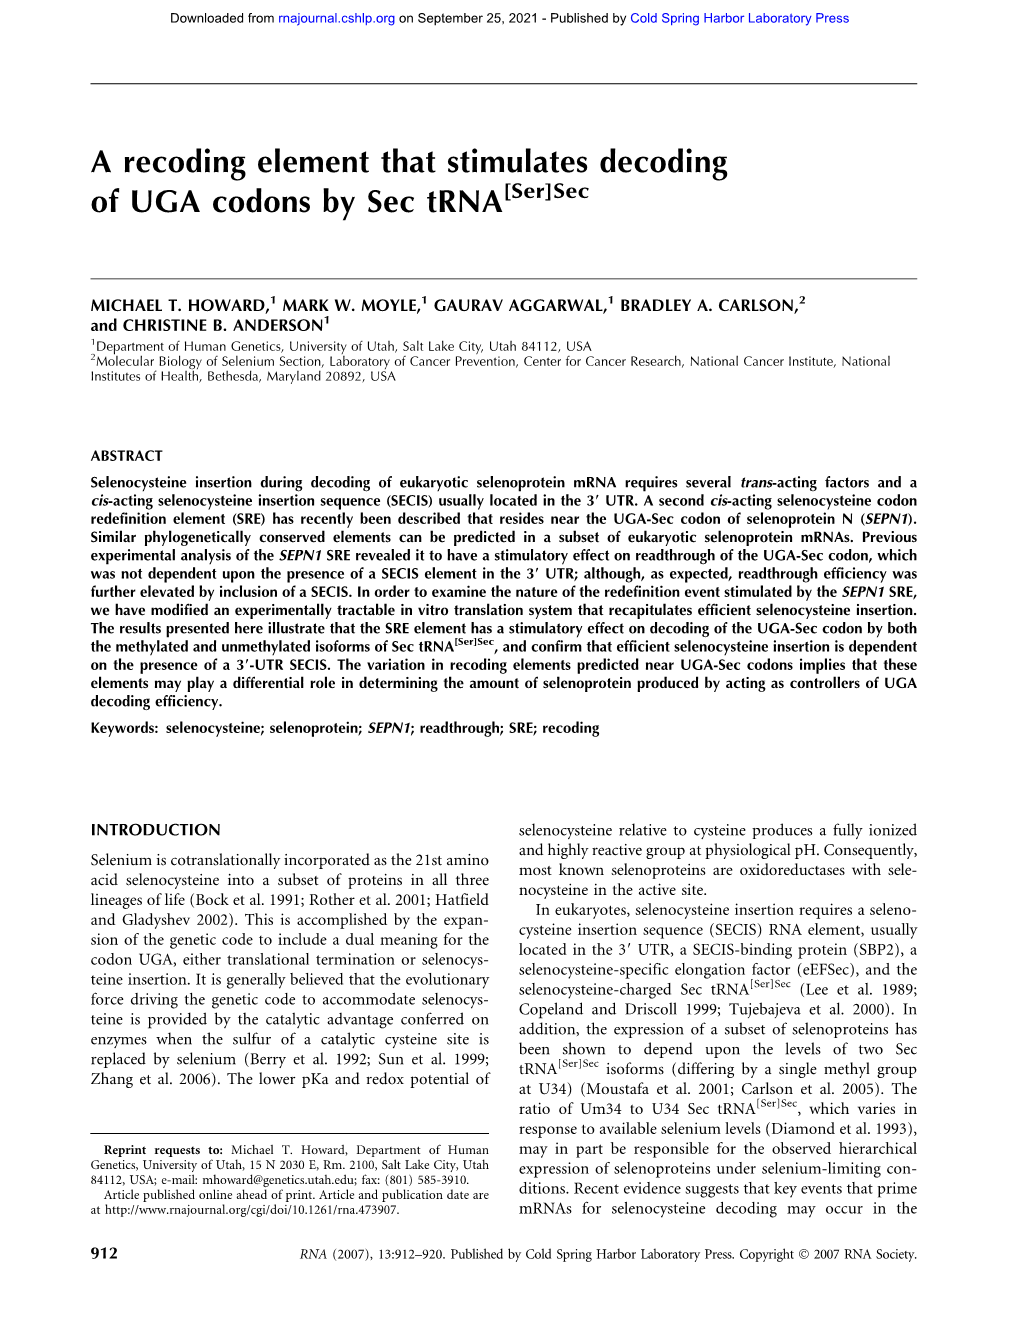 A Recoding Element That Stimulates Decoding of UGA Codons by Sec Trna[Ser]Sec